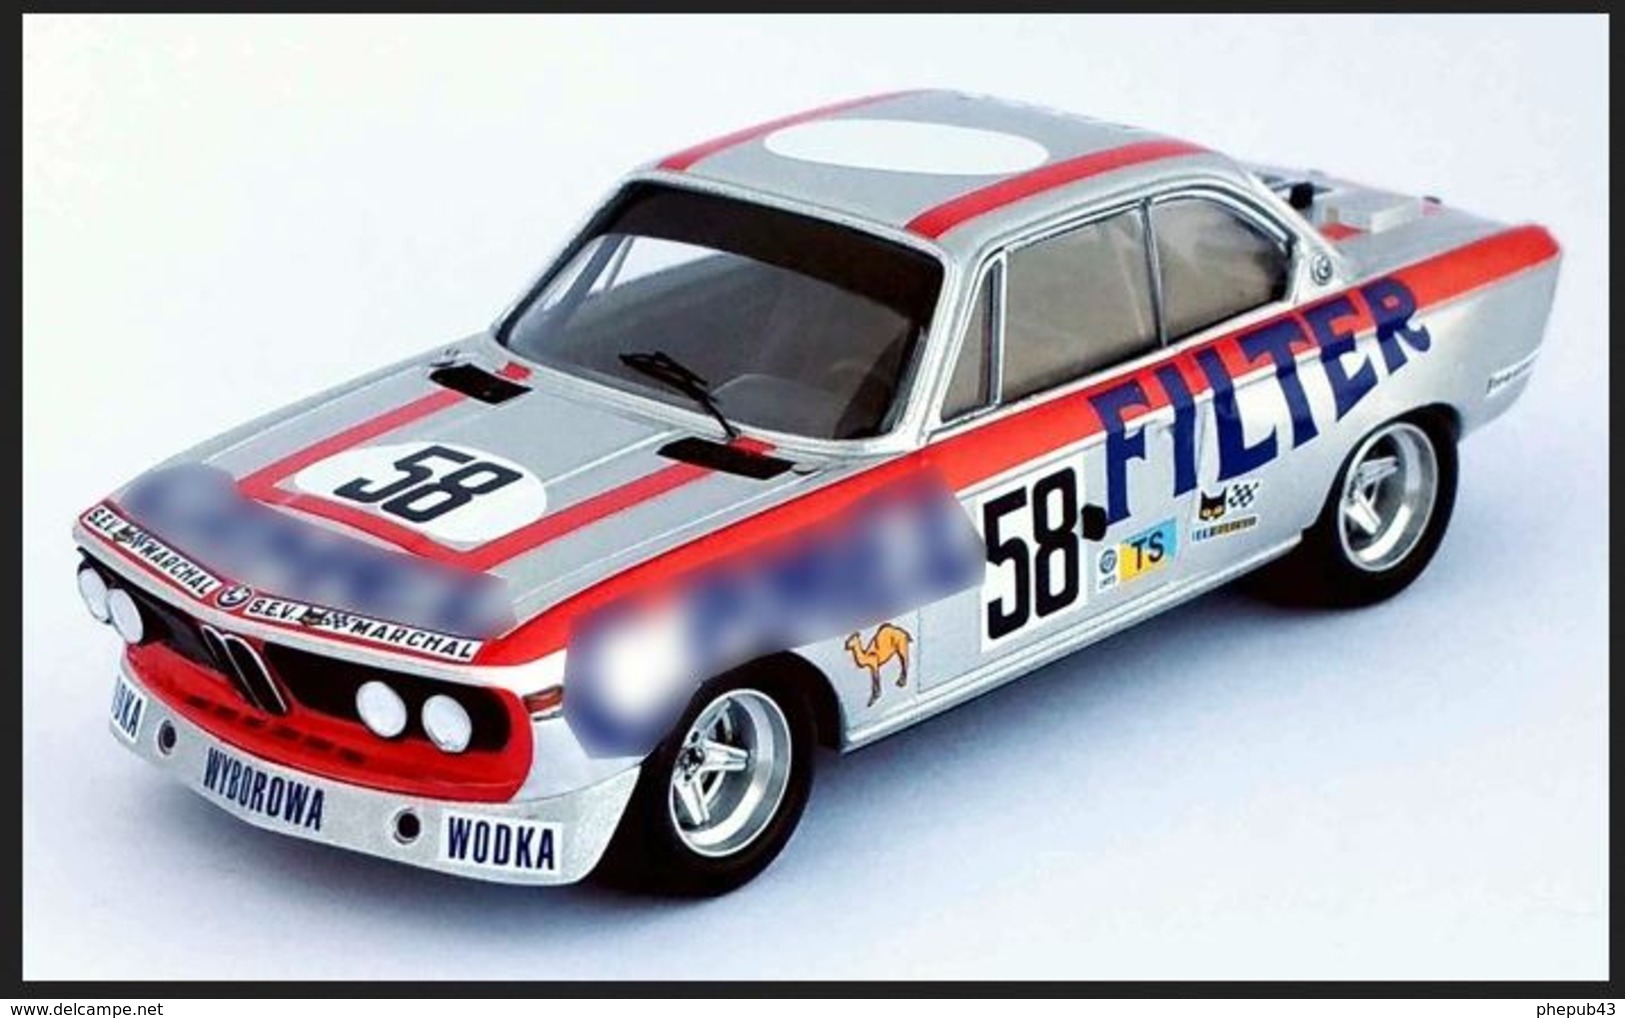 BMW 3.0 CSL - Camel -  W. Brun/C. Kocher/J.-P. Aeschlimann - 24h Le Mans 1973 #58 - Troféu - Trofeu